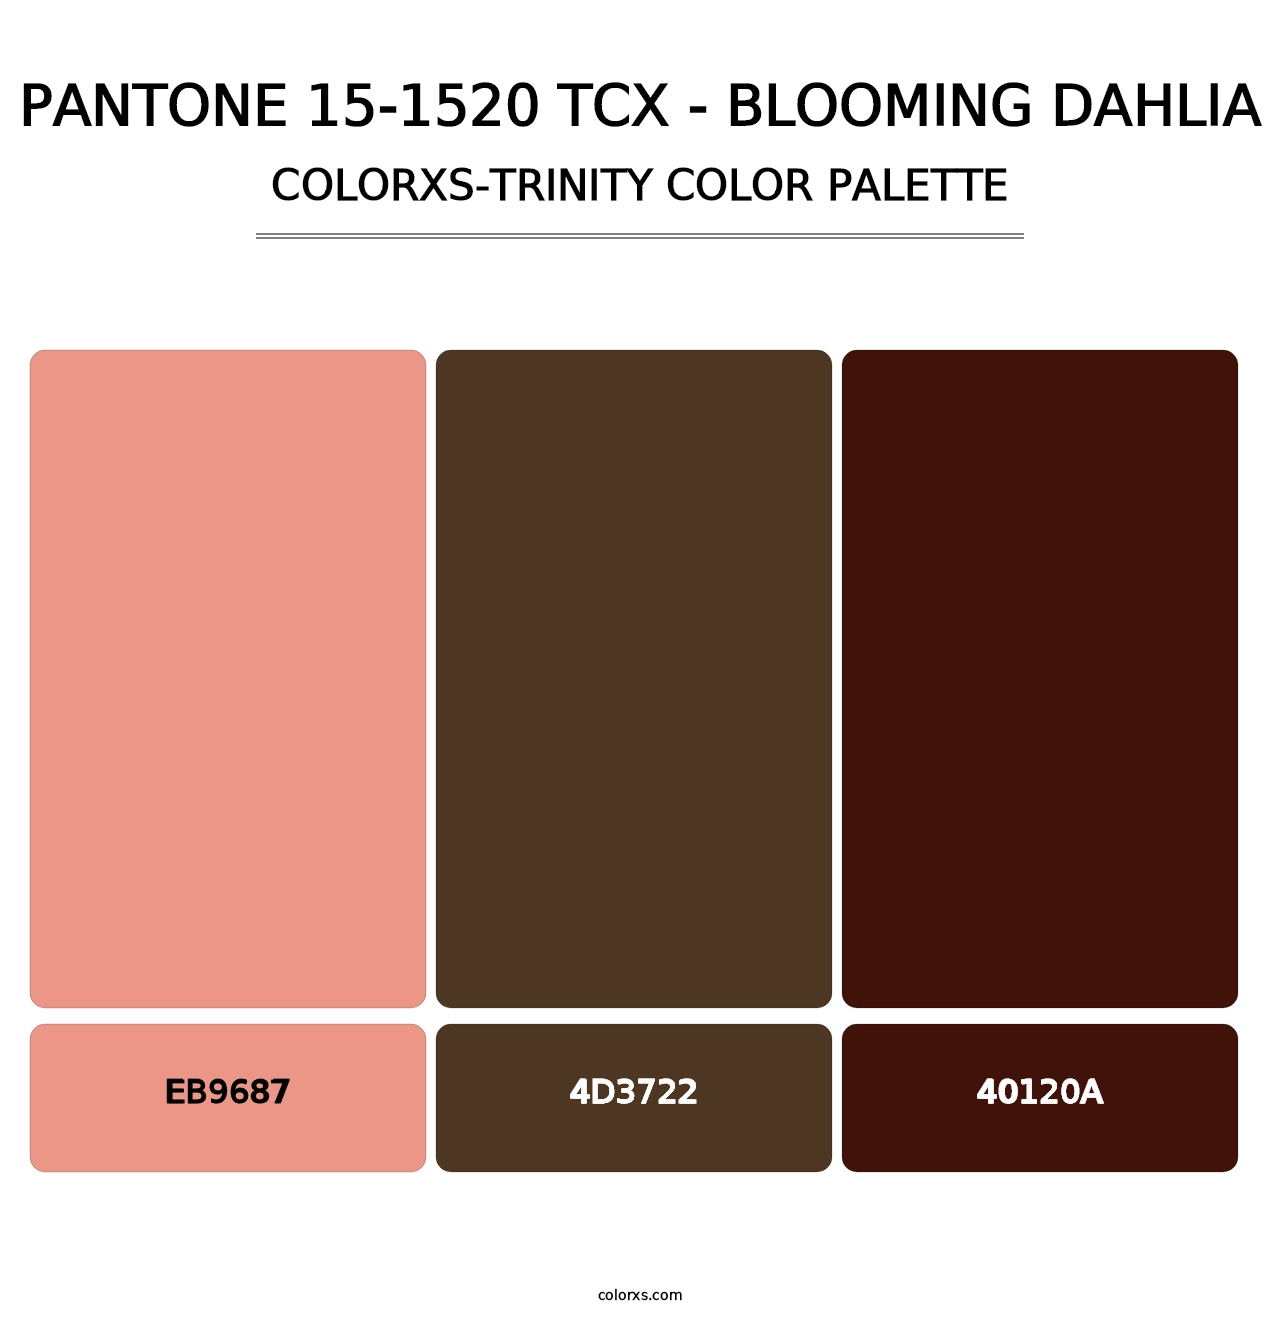 PANTONE 15-1520 TCX - Blooming Dahlia - Colorxs Trinity Palette